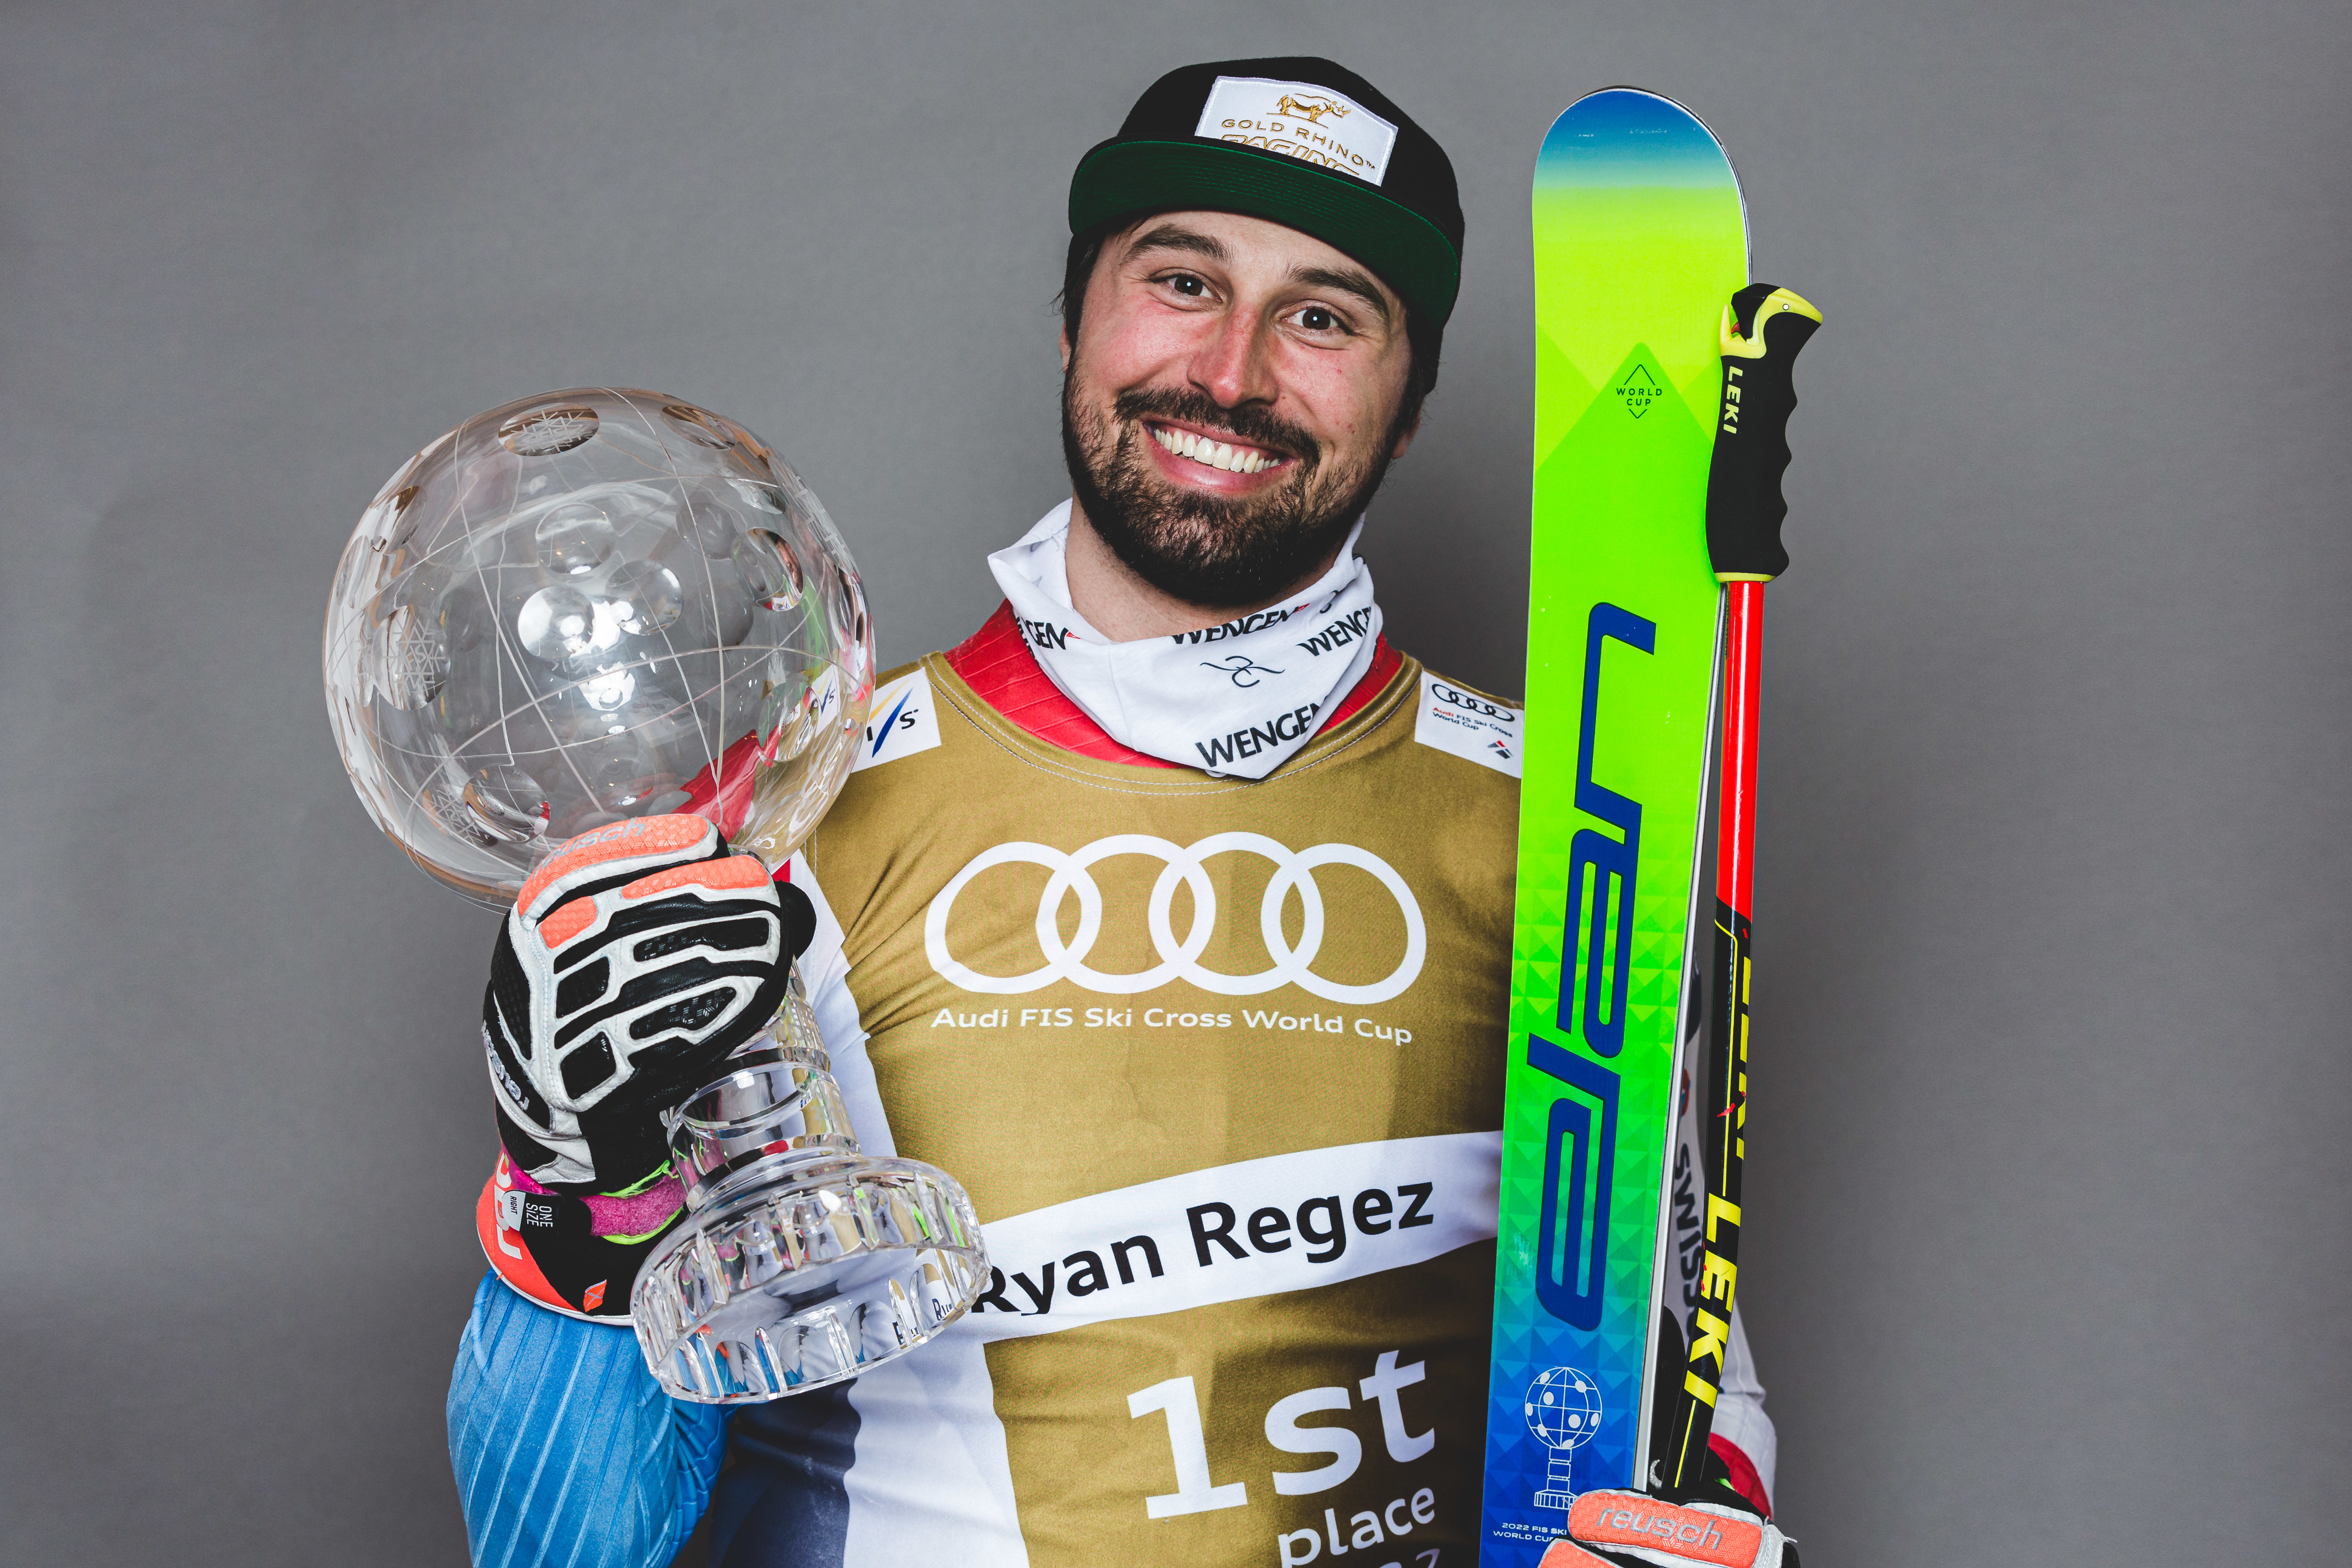 Ryan Regez - a Ski Cross star